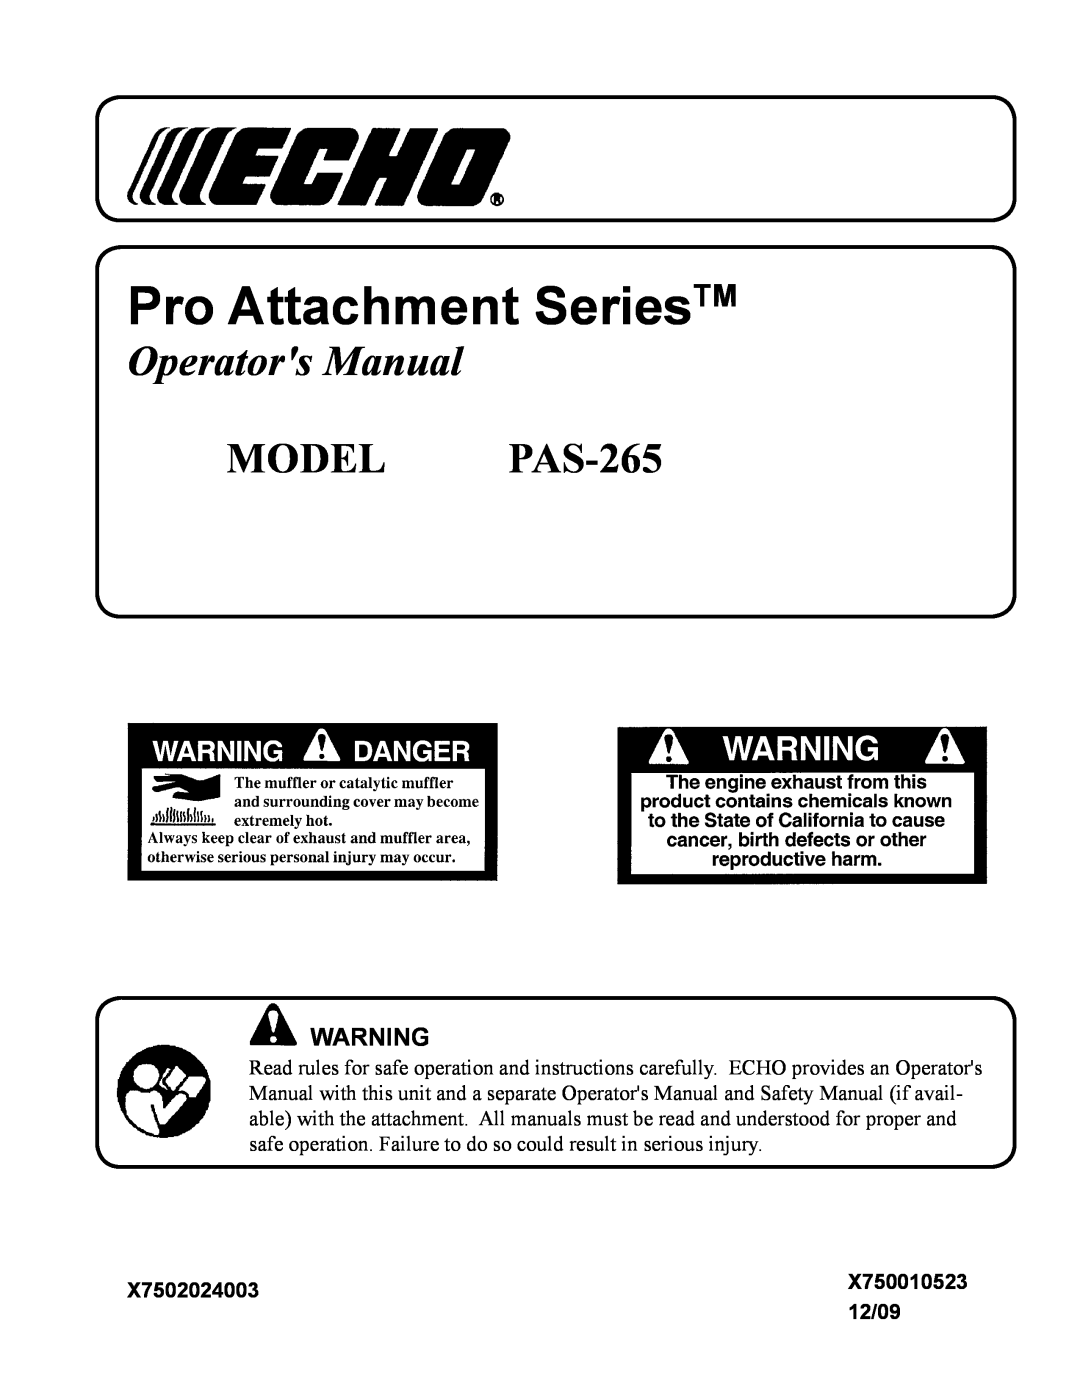 Echo manual X7502024003, 12/09, Pro Attachment SeriesTM, Operators Manual, MODEL PAS-265, X750010523 